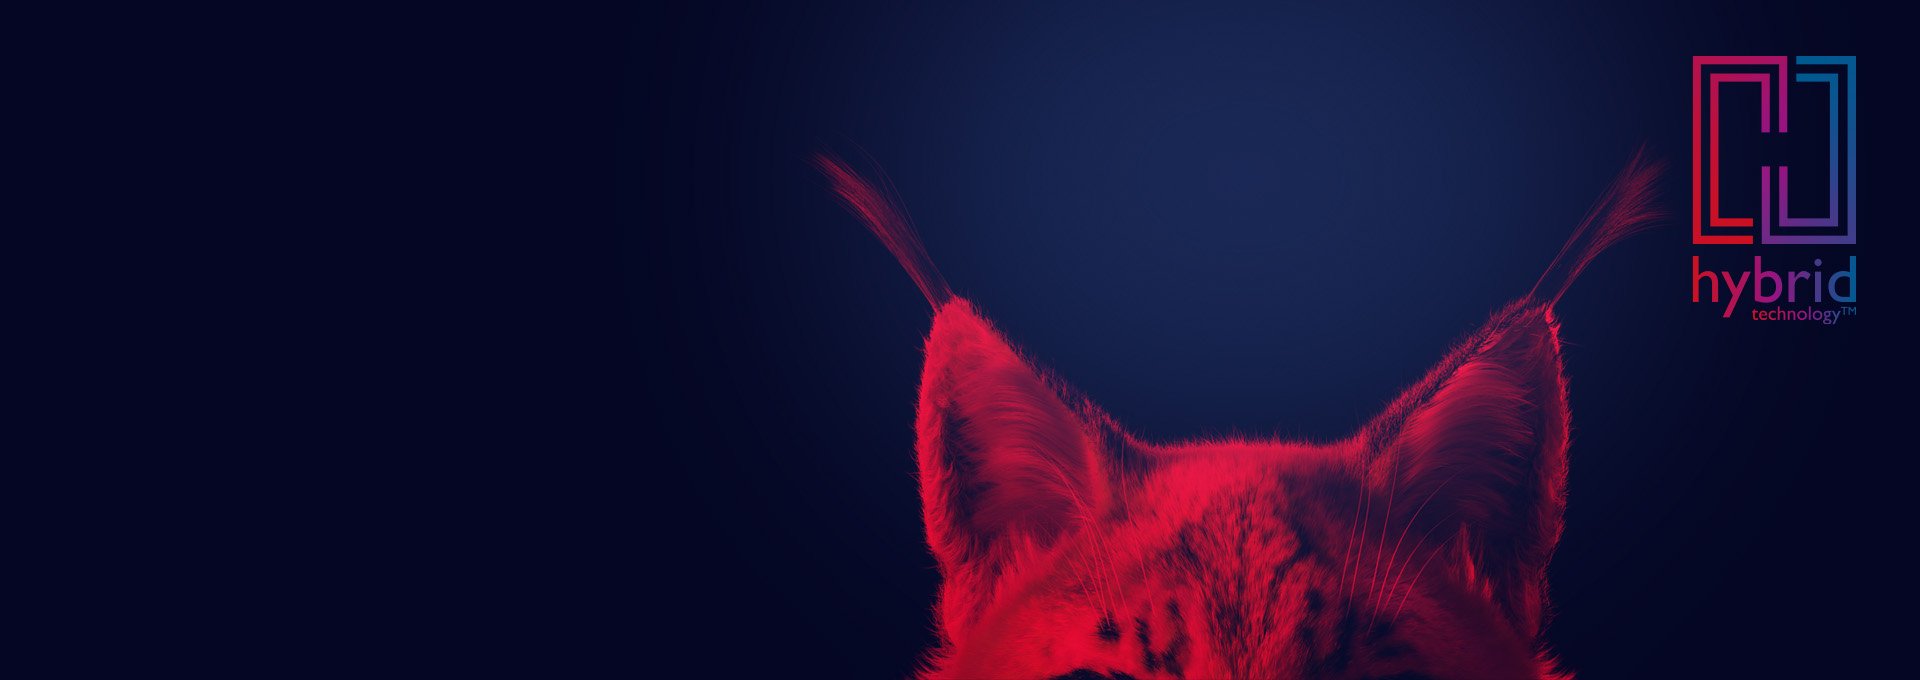 Red drawing of lynx ears on dark blue background and Hybrid Technology logo of Bernafon Alpha XT hearing aids